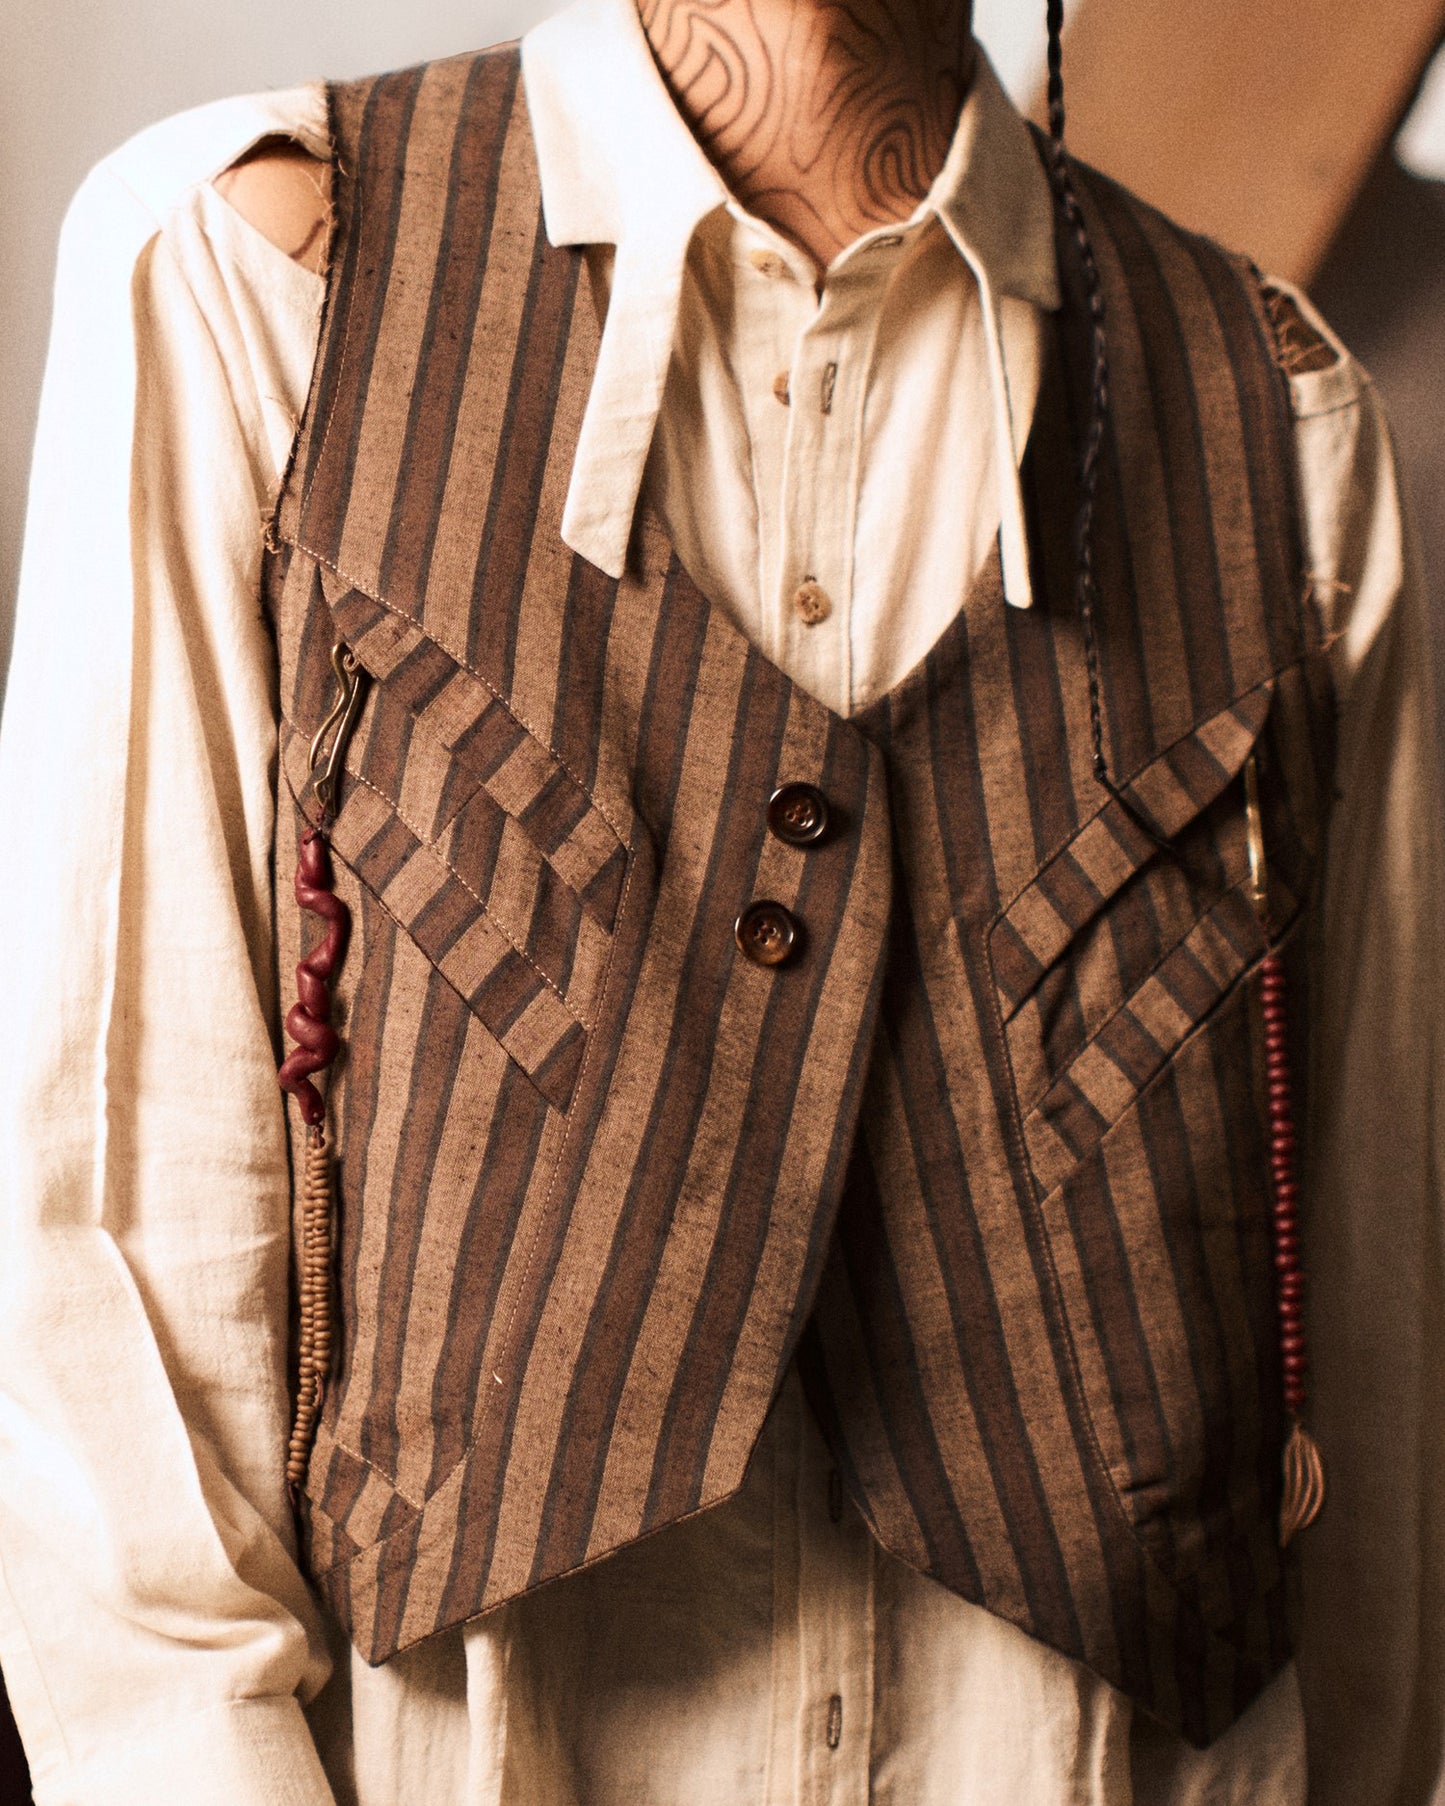 Anino Waistcoat (Deadstock Striped Cotton)